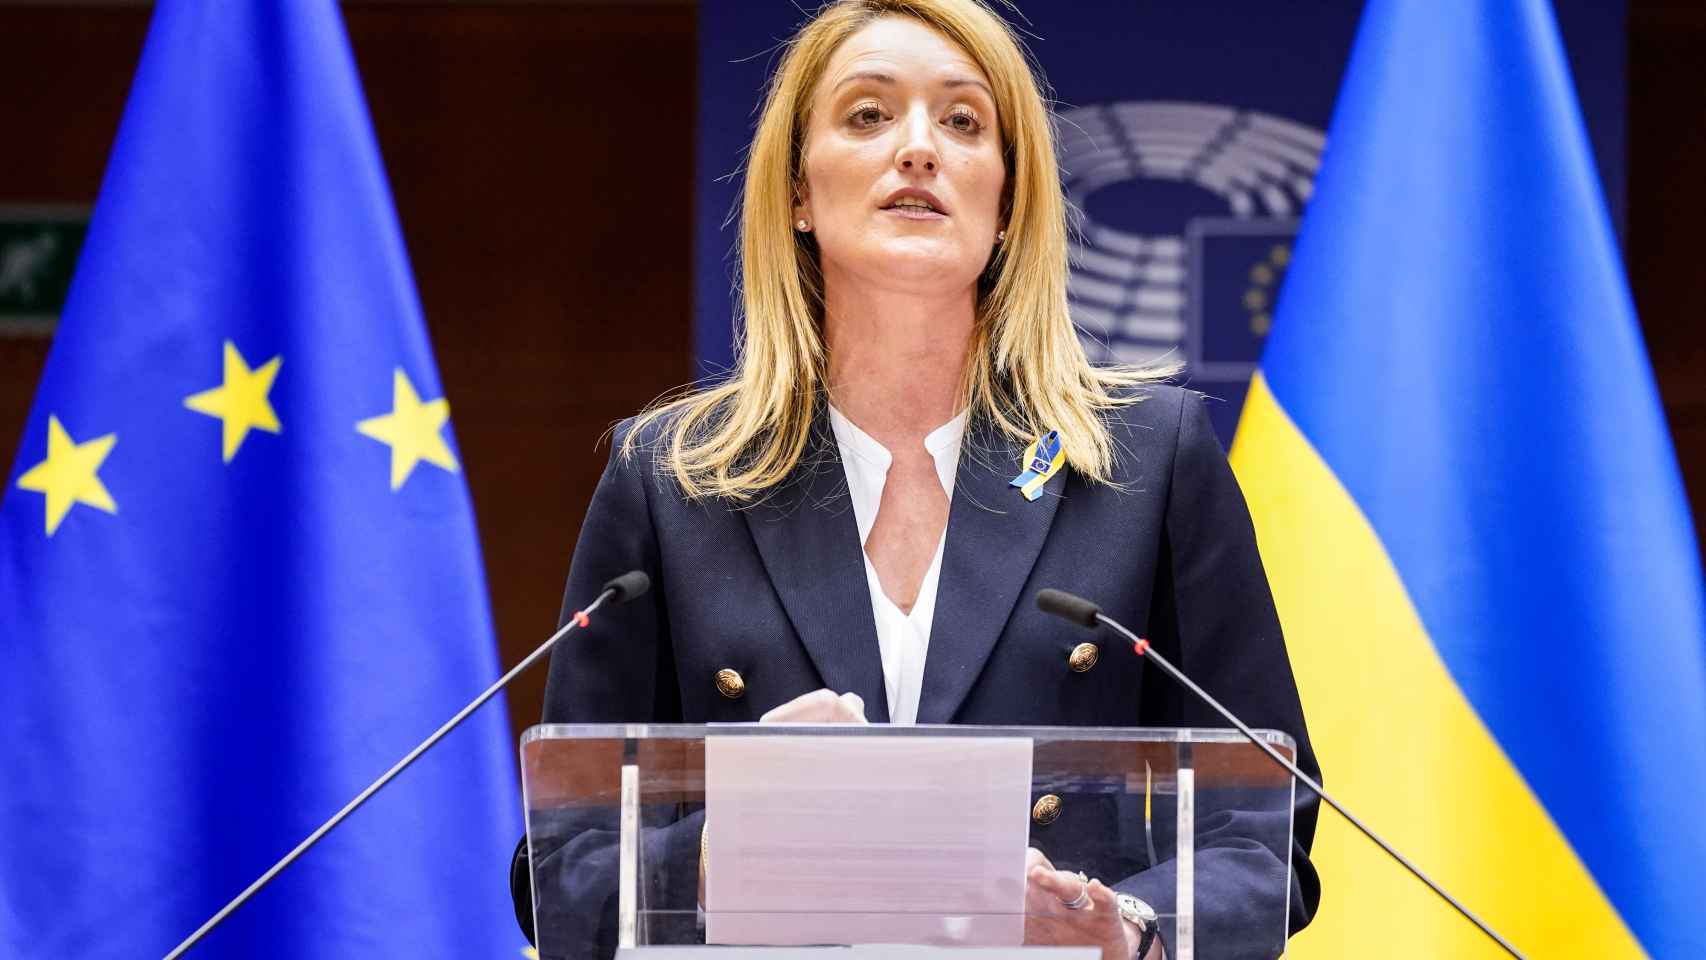 La presidenta de la Eurocámara, Roberta Metsola, apoya las aspiraciones europeas de Ucrania